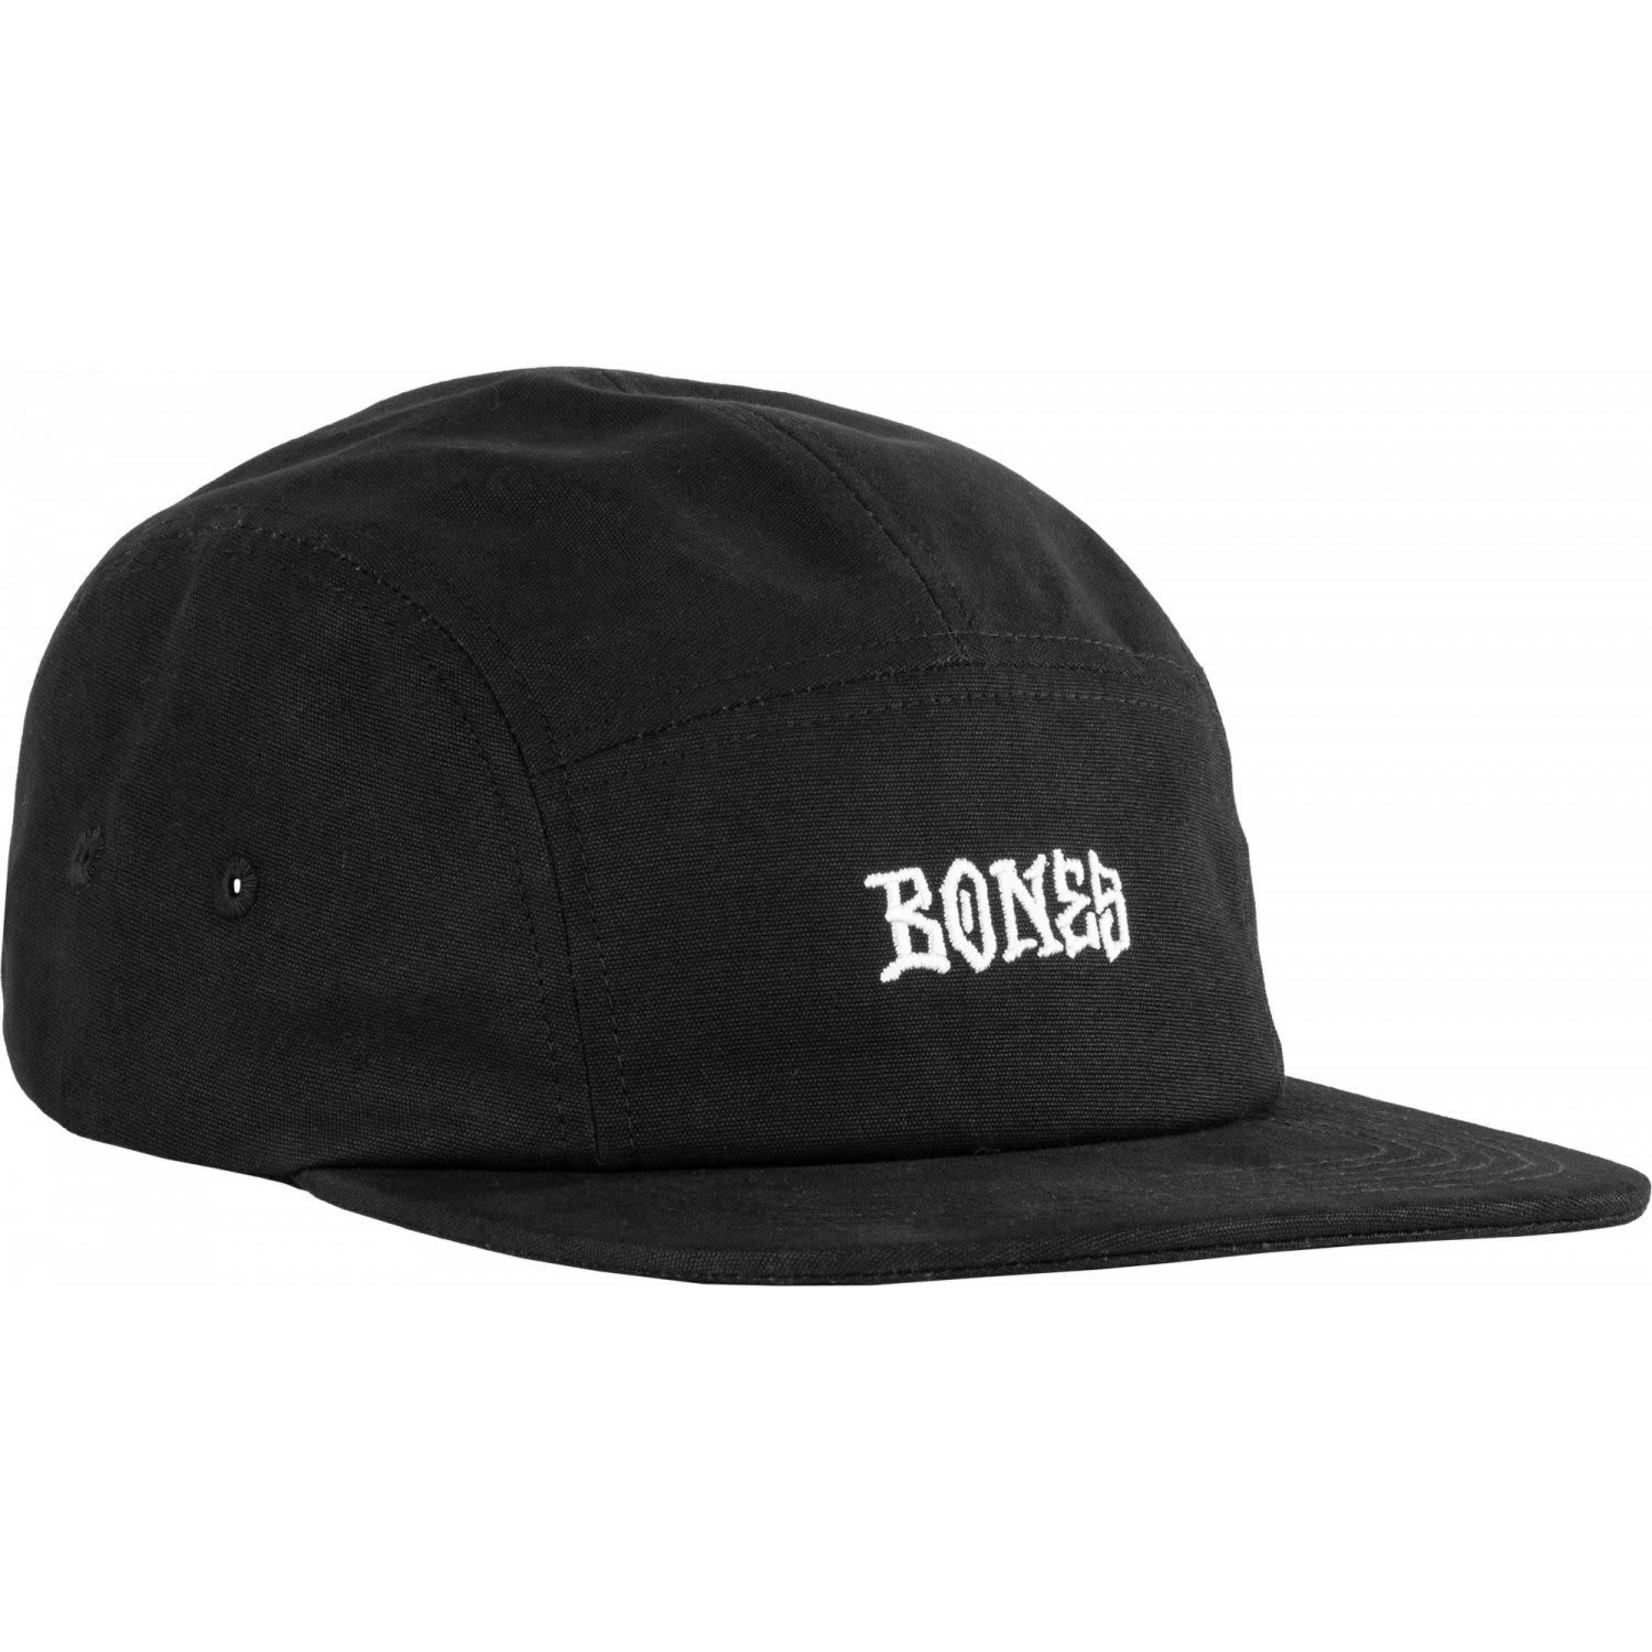 Bones Bones Wheels 5 Panel Stitch Hat - Black